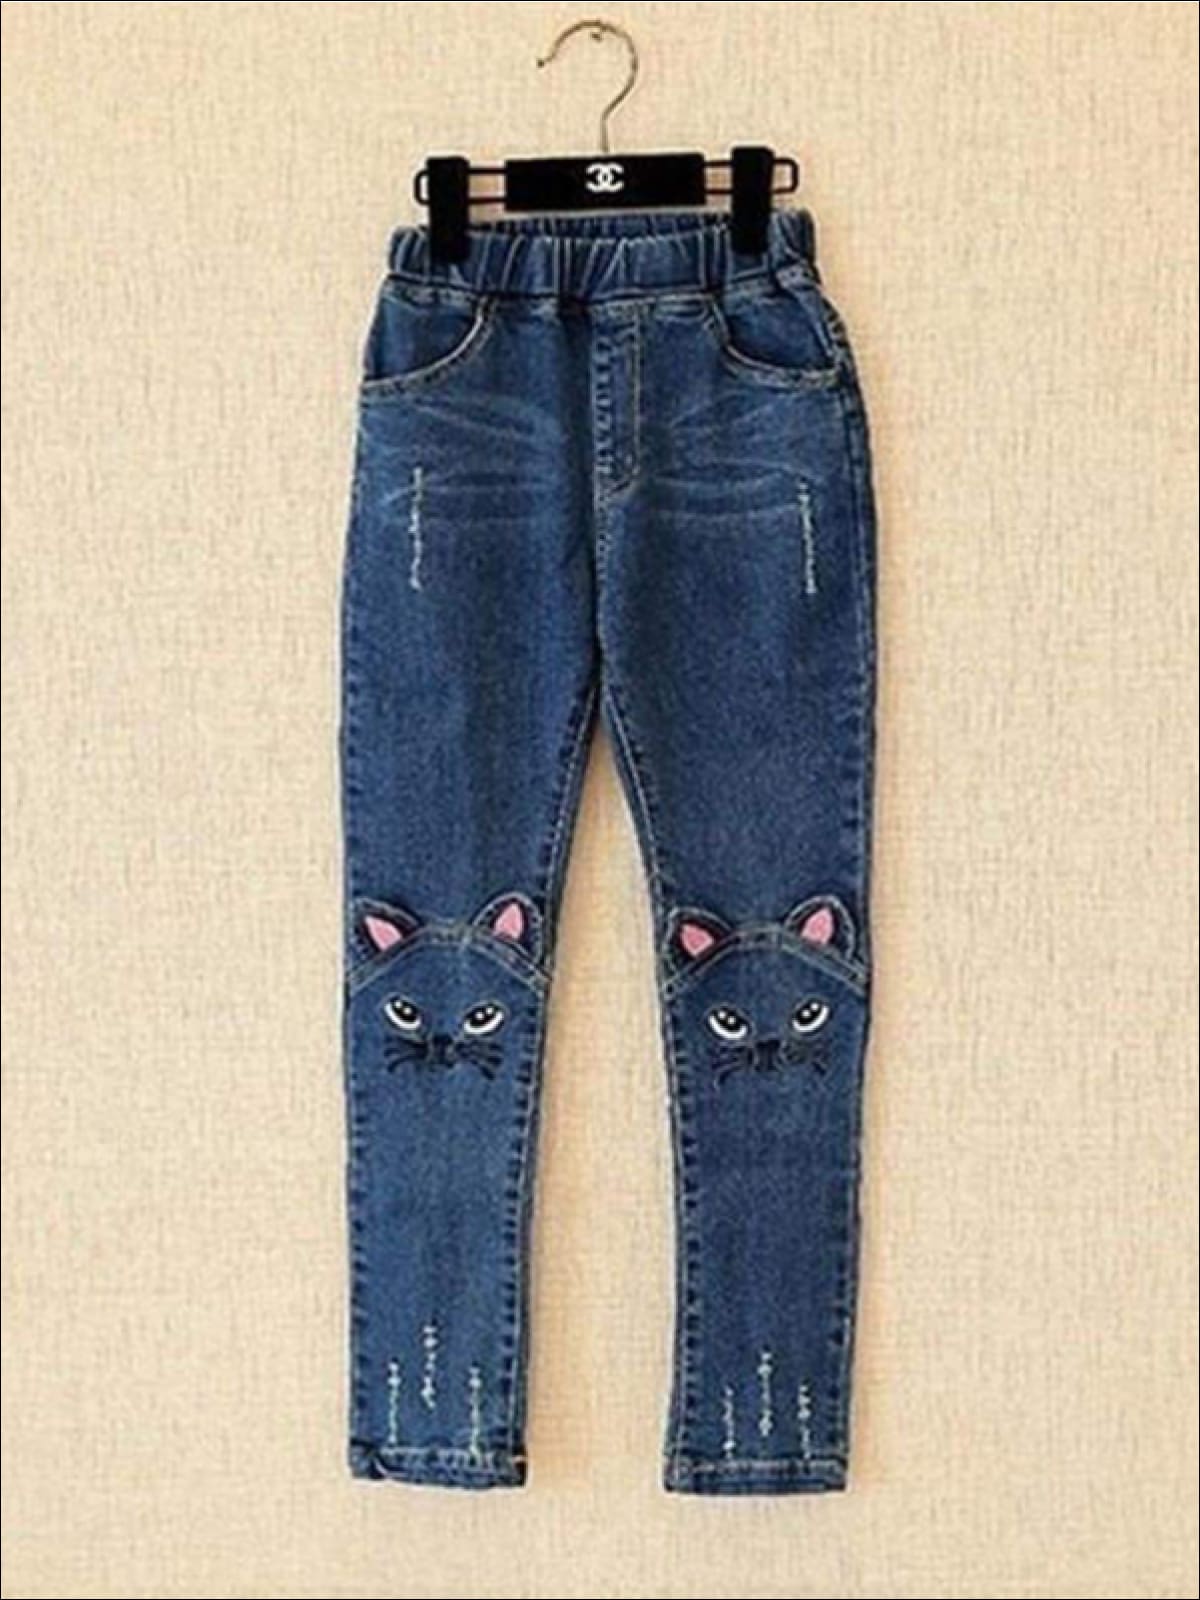 Kids Denim Clothes | Kitty Cat Knee Jeans | Mia Belle Girls Boutique